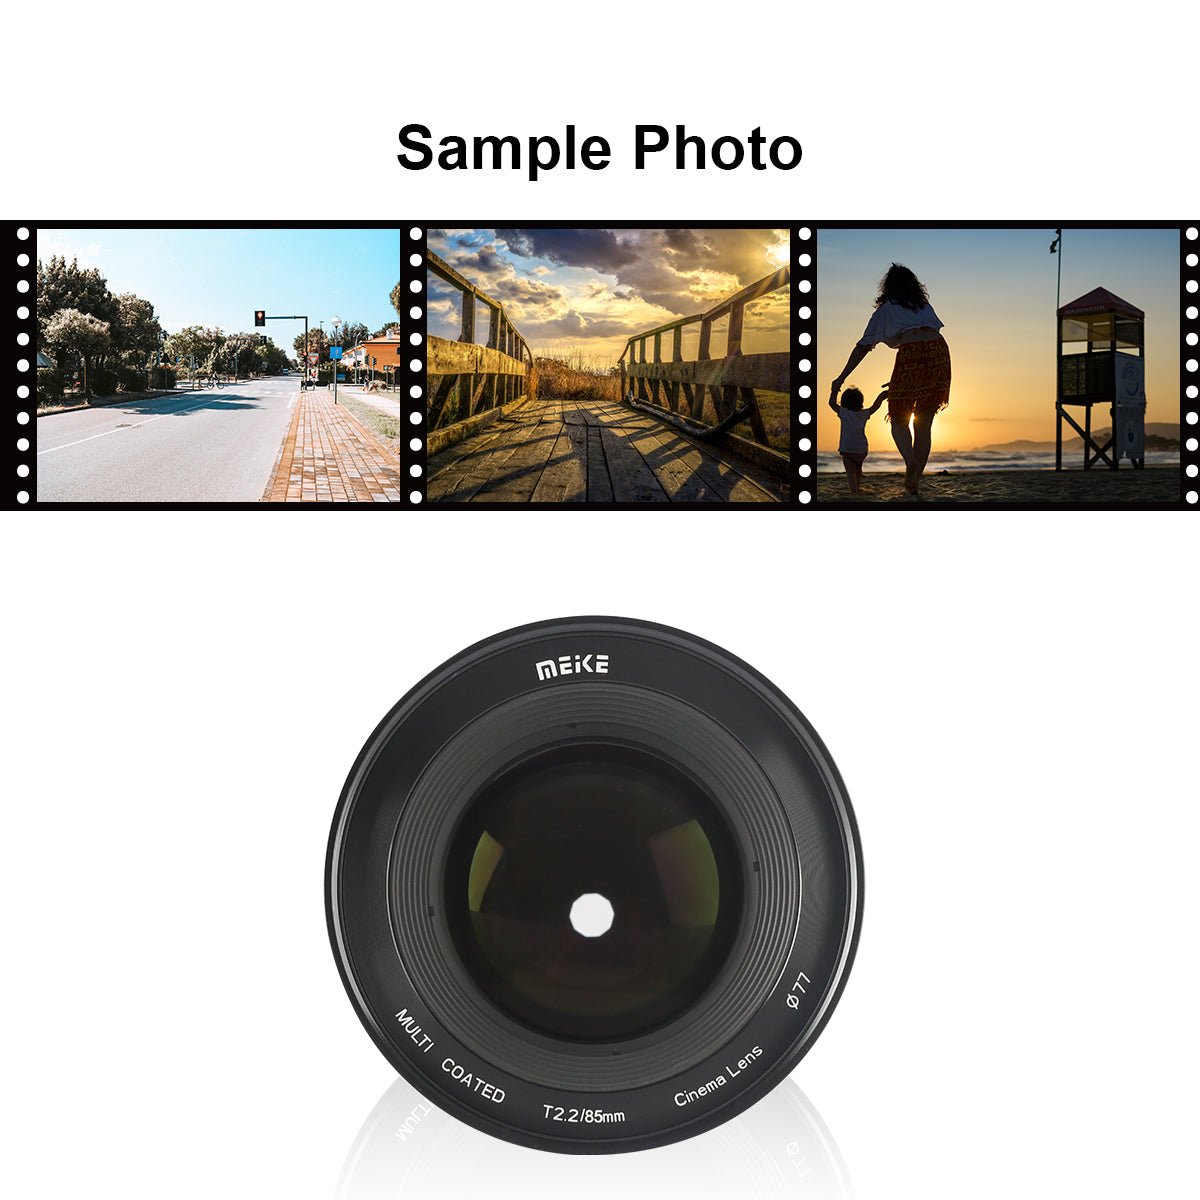 Meike Cinema Prime 85mm T2.2 Lens (Fujifilm X Mount) with Sample Shots